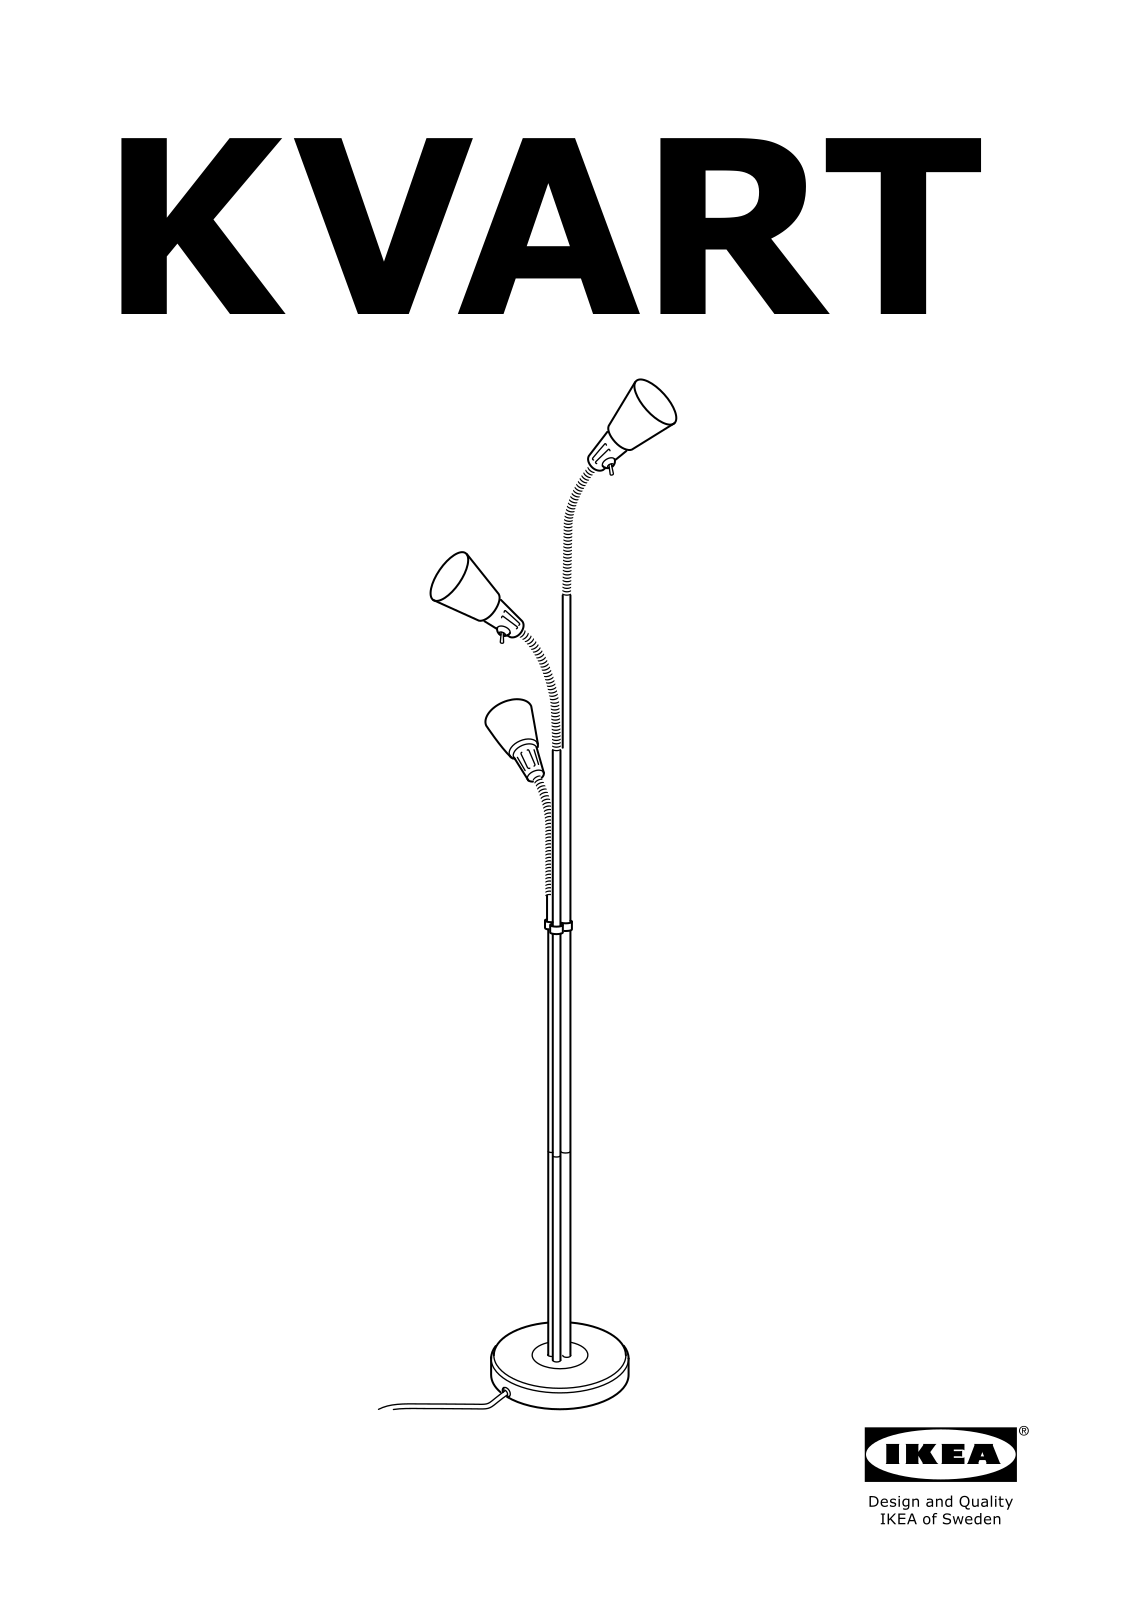 IKEA KVART User Manual